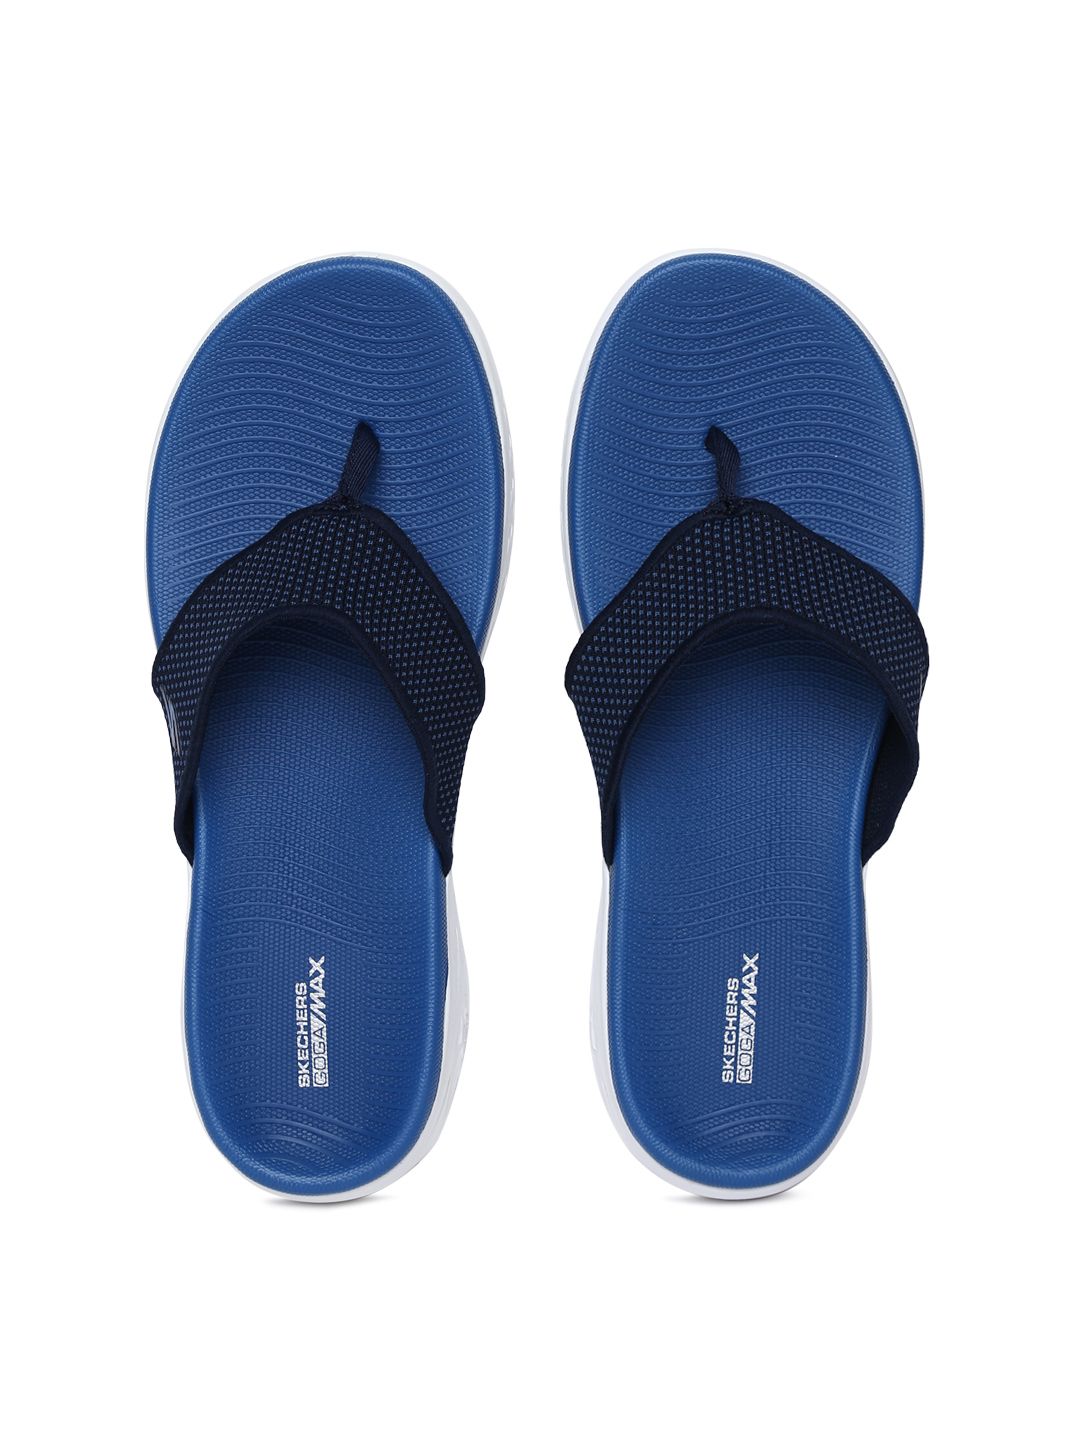 skechers sandals mens blue